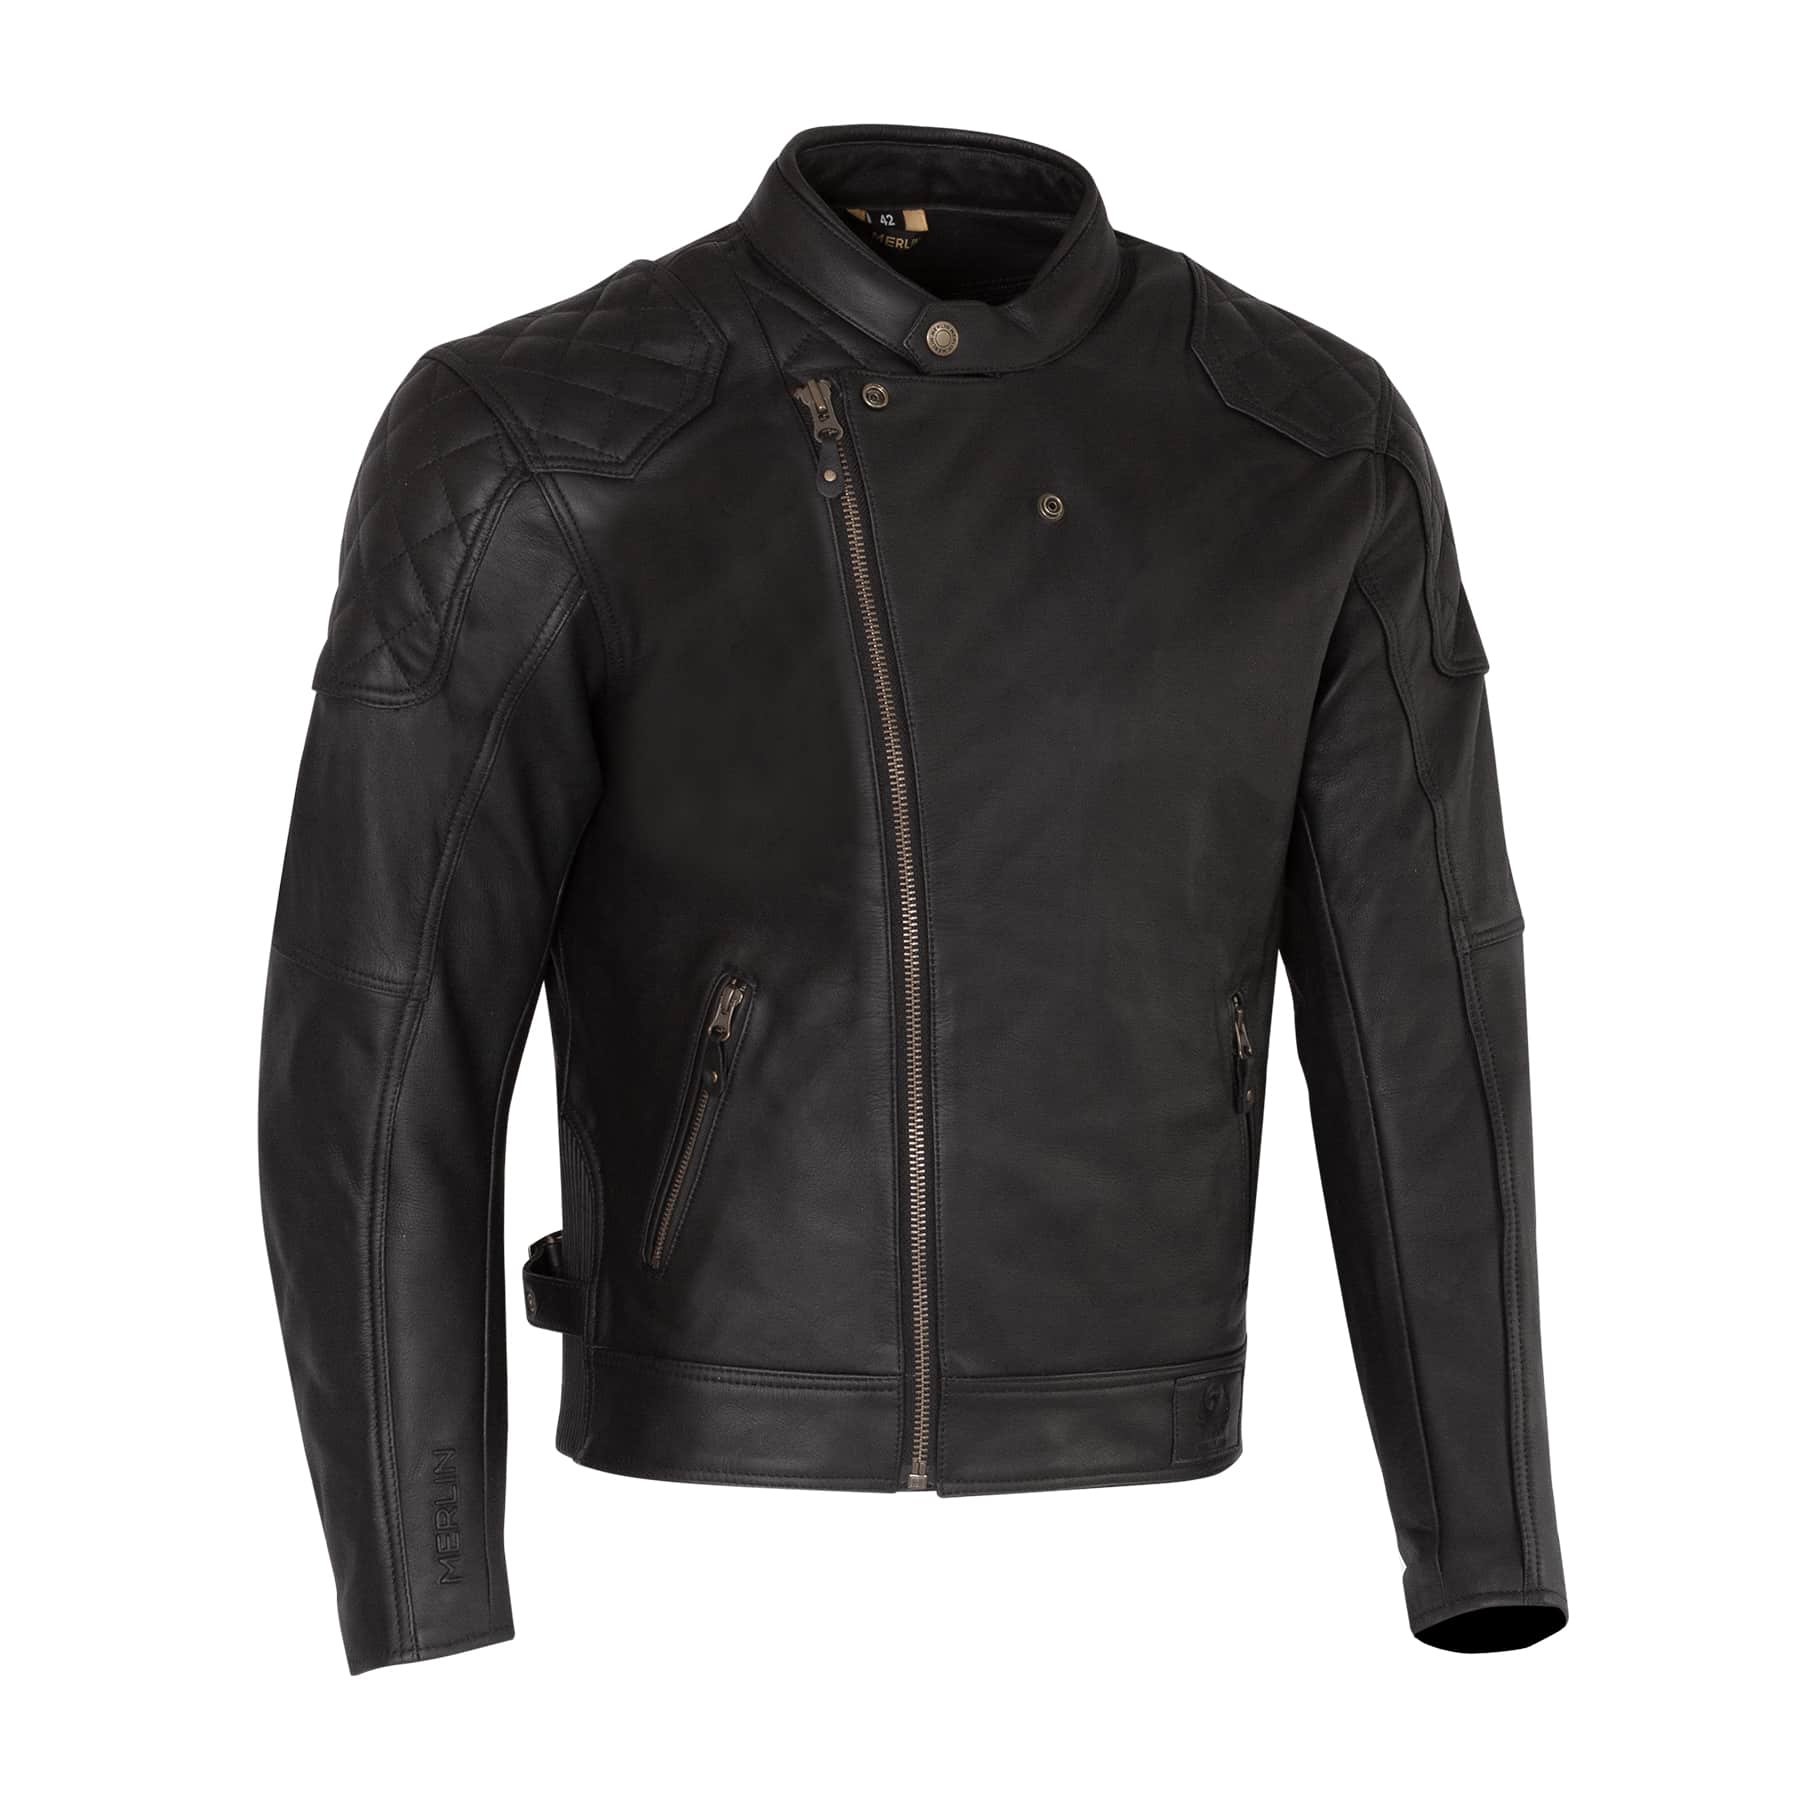 Merlin Chester jacket in black